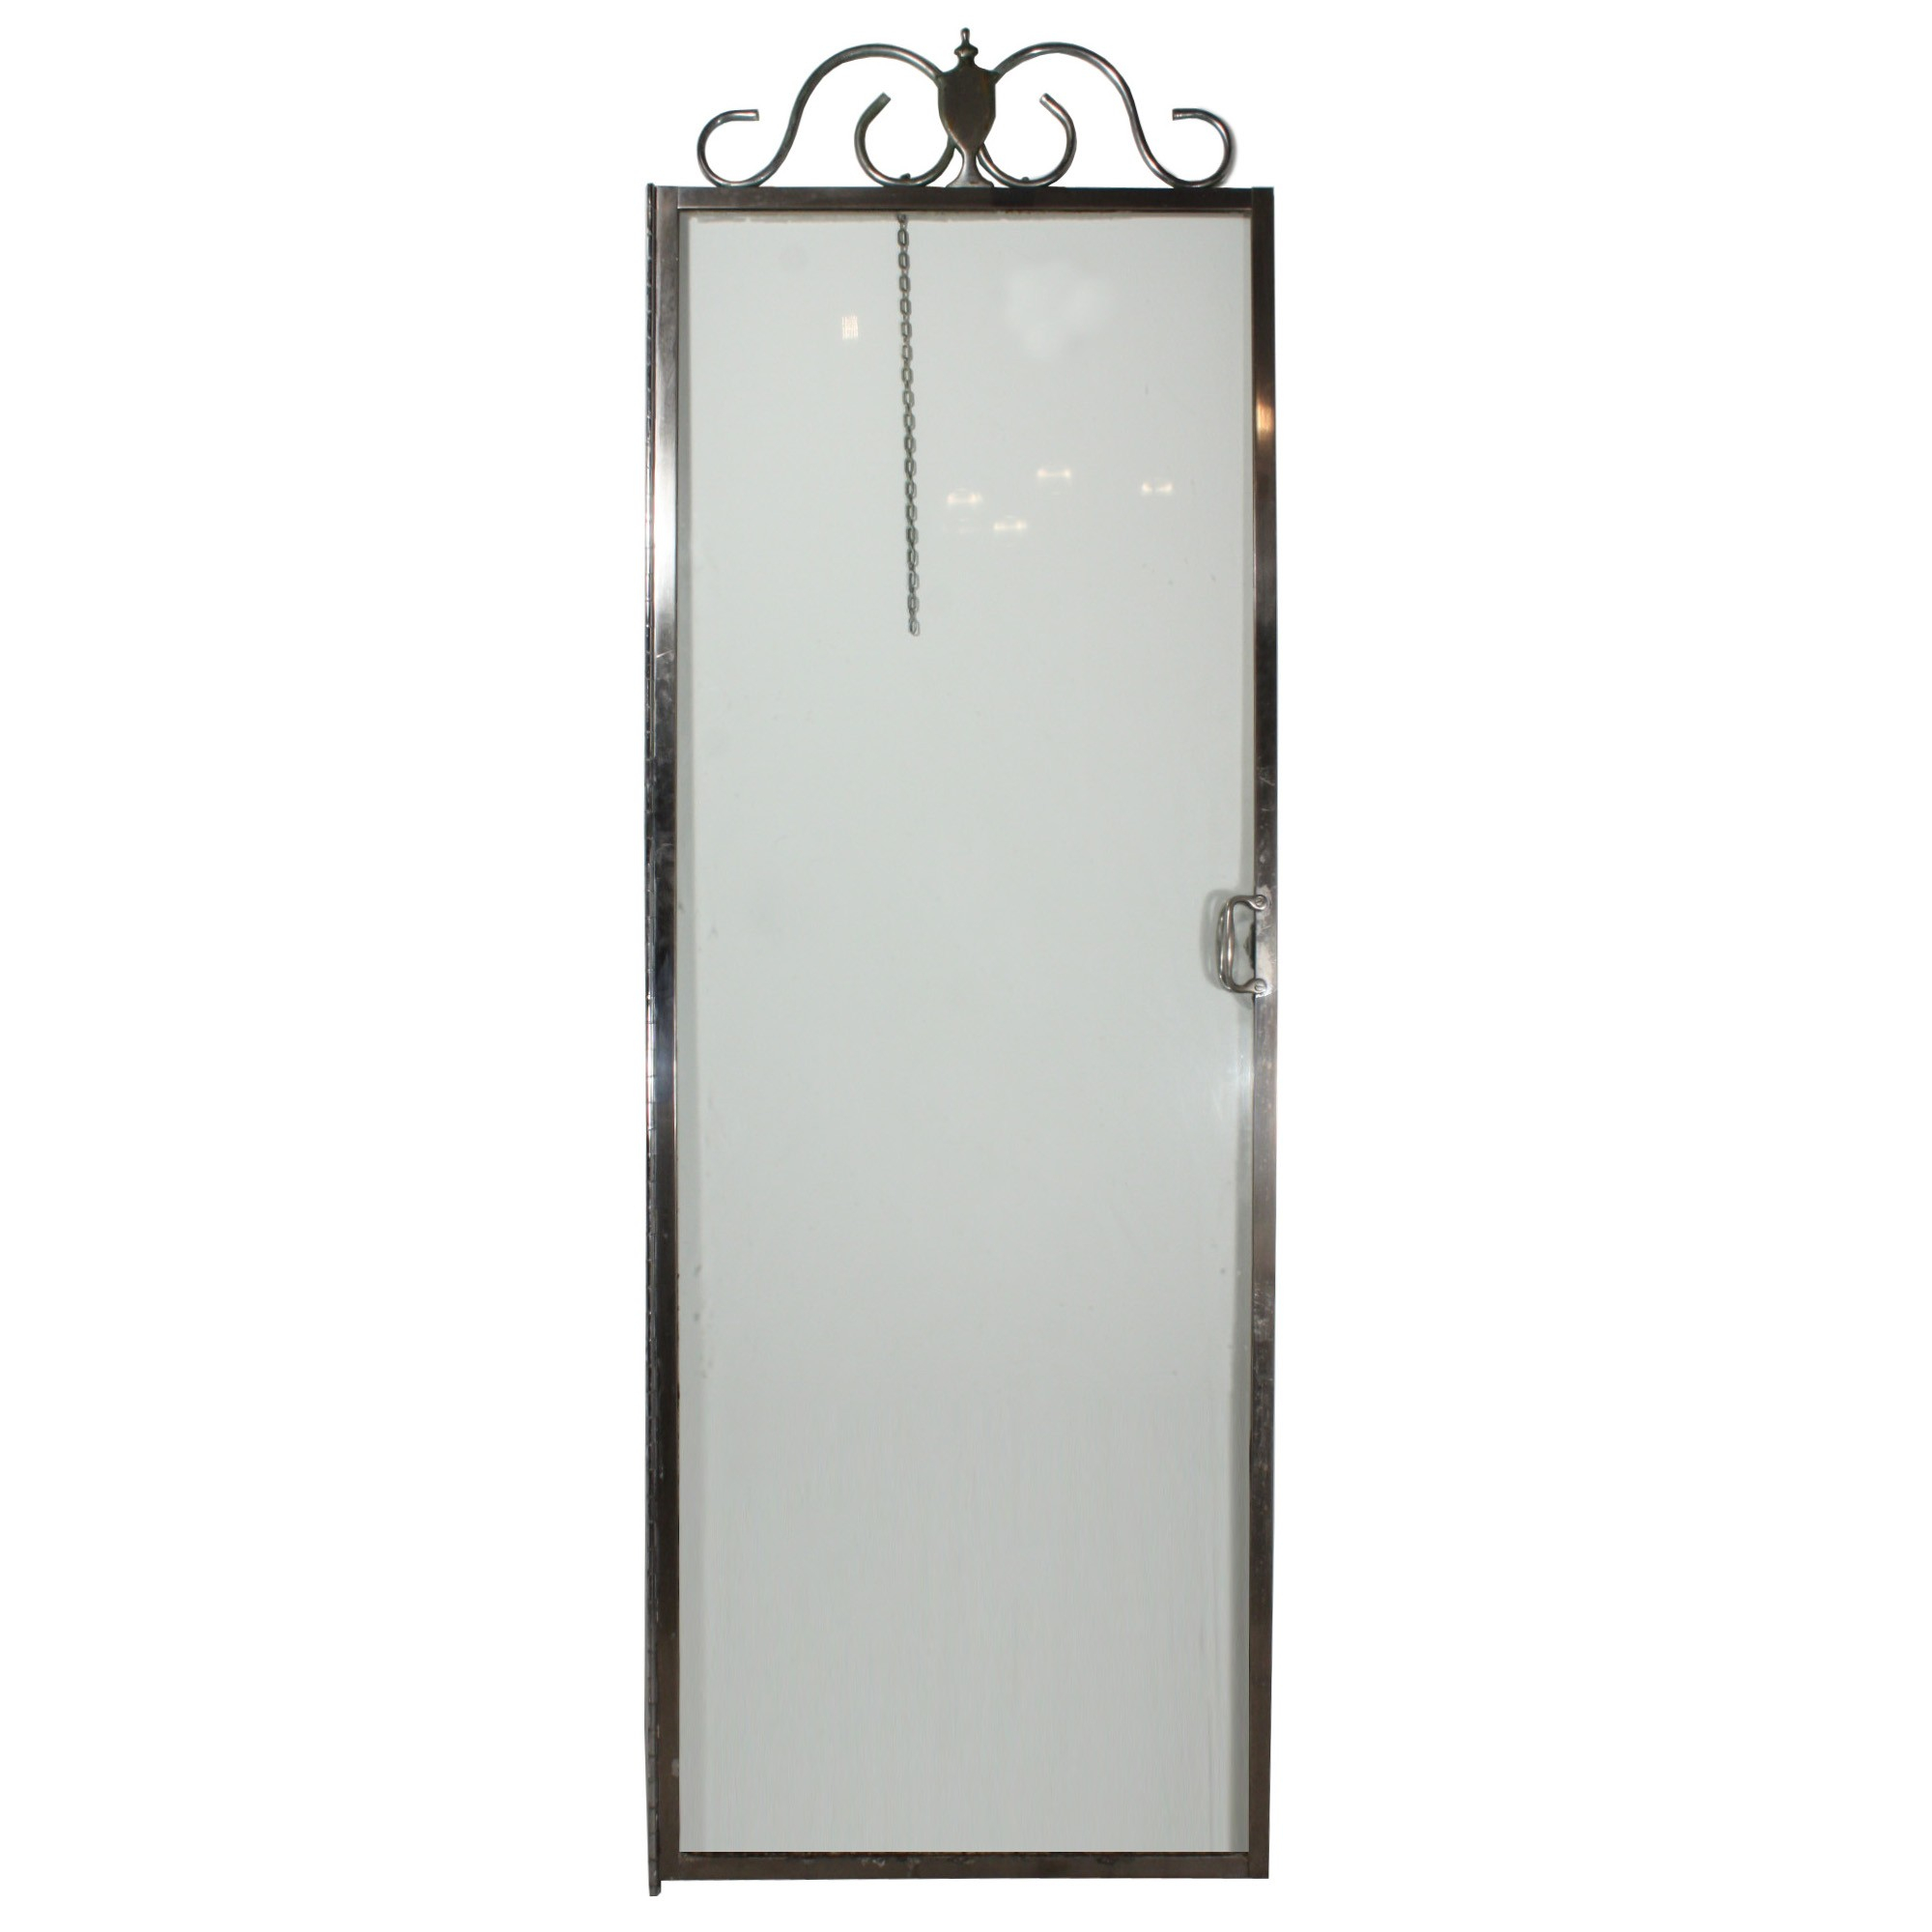 Stunning Antique Framed Glass Shower Door Keystone Shower Door Co inside measurements 2000 X 2000